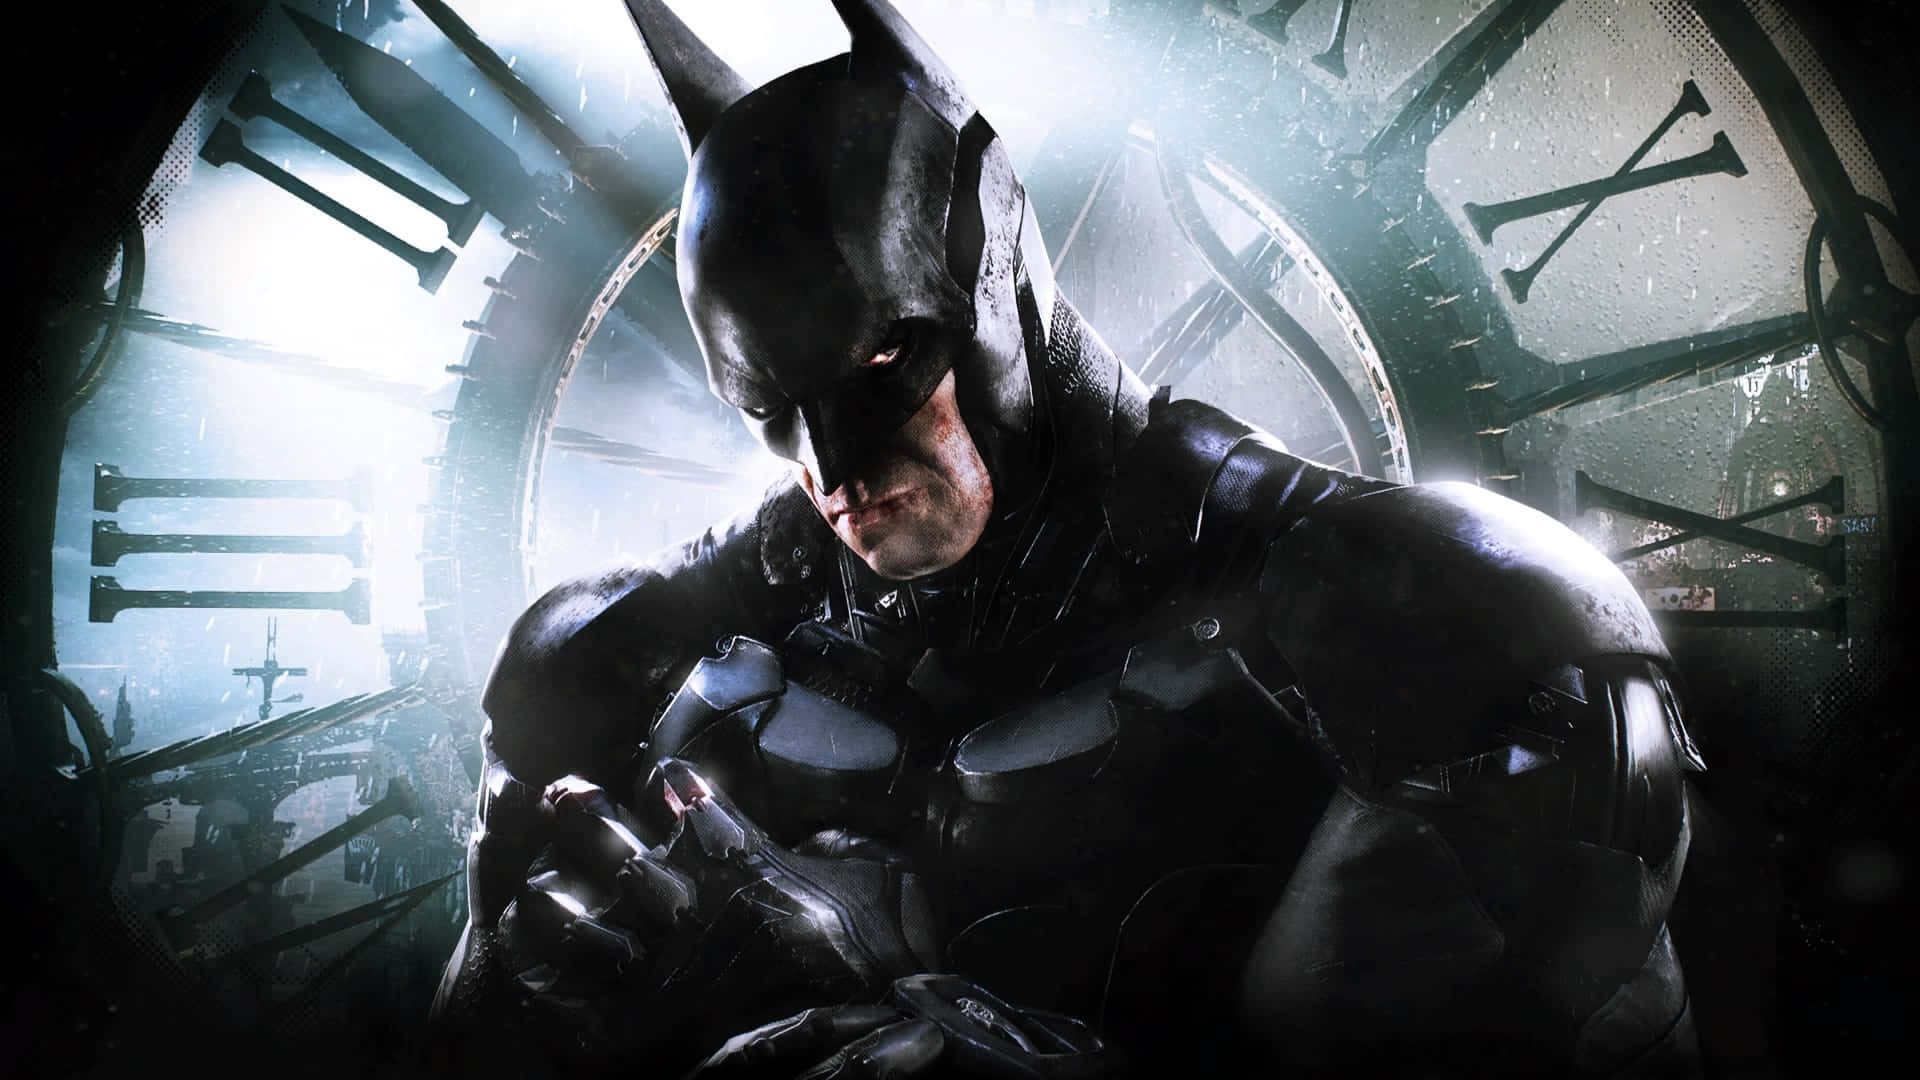 The Dark Knight - Bruce Wayne in a Pensive Moment Wallpaper